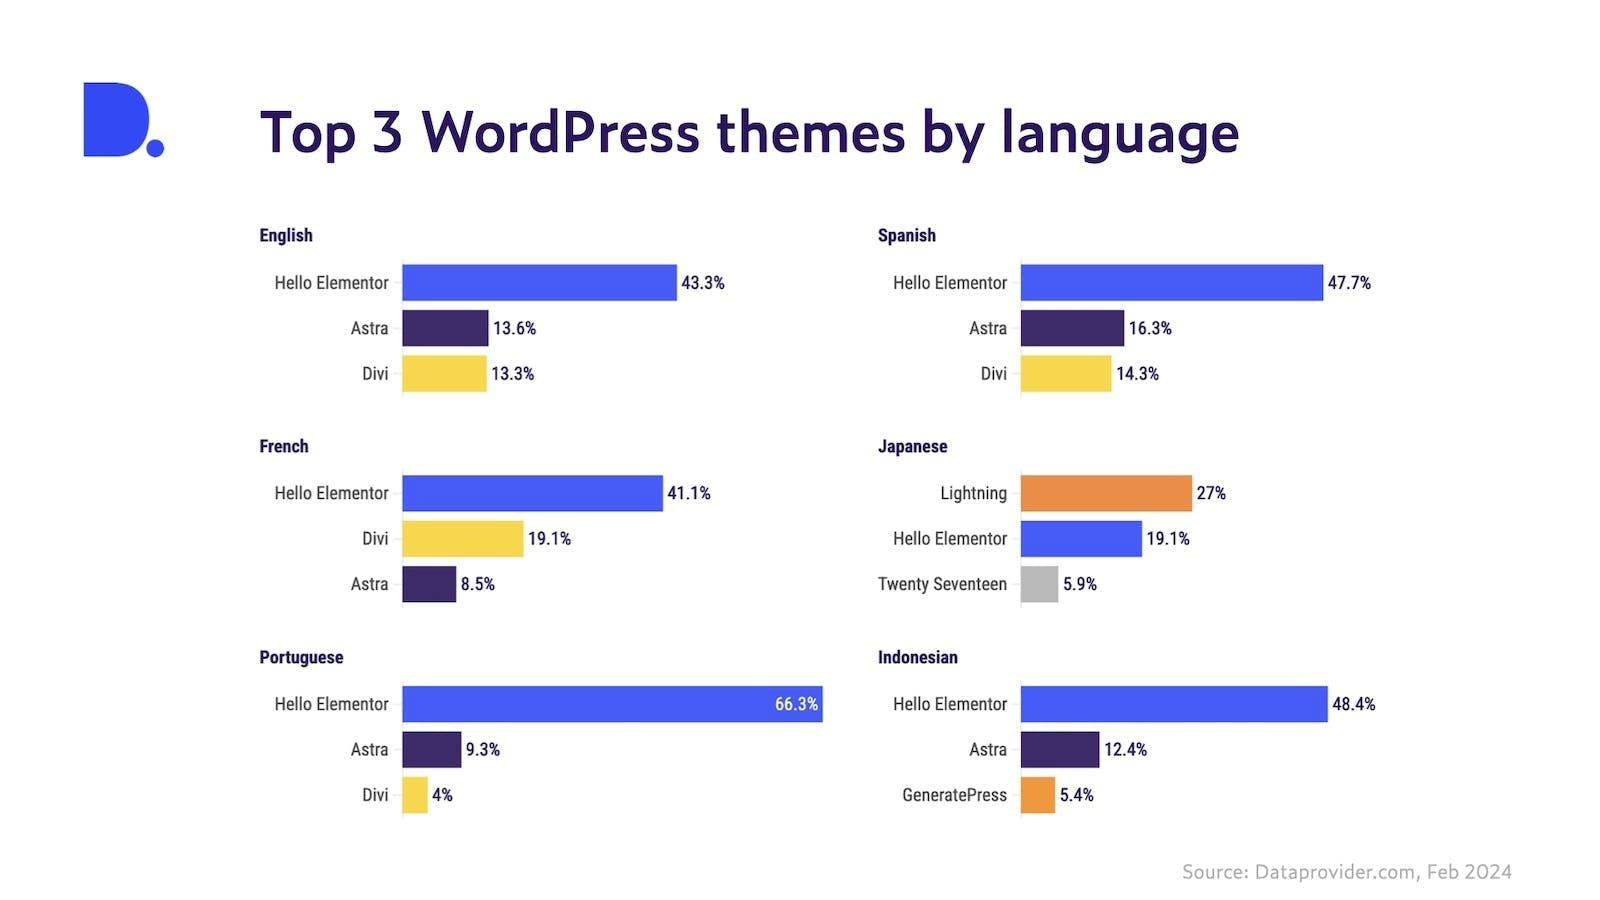 The top 3 most popular WordPress themes taking language into consideration. English: Hello Elementor 43.3%, Astra 13.6%, Divi 13.3%. Spanish: Hello Elementor 47.7%, Astra 16.3%, Divi 14.3% French: Hello Elementor 41.1%, Divi 19.1%, Astra 8.5%, Japanese: Lightning 27% Hello Elementor 19.1%, Twenty Seventeen 5.9%, Portuguese: Hello Elementor 66,3%, Astra 6.3%, Divi 4%, Indonesian: Hello Elementor 48.4%, Astra 12.4%, GeneratePress 5.4%.